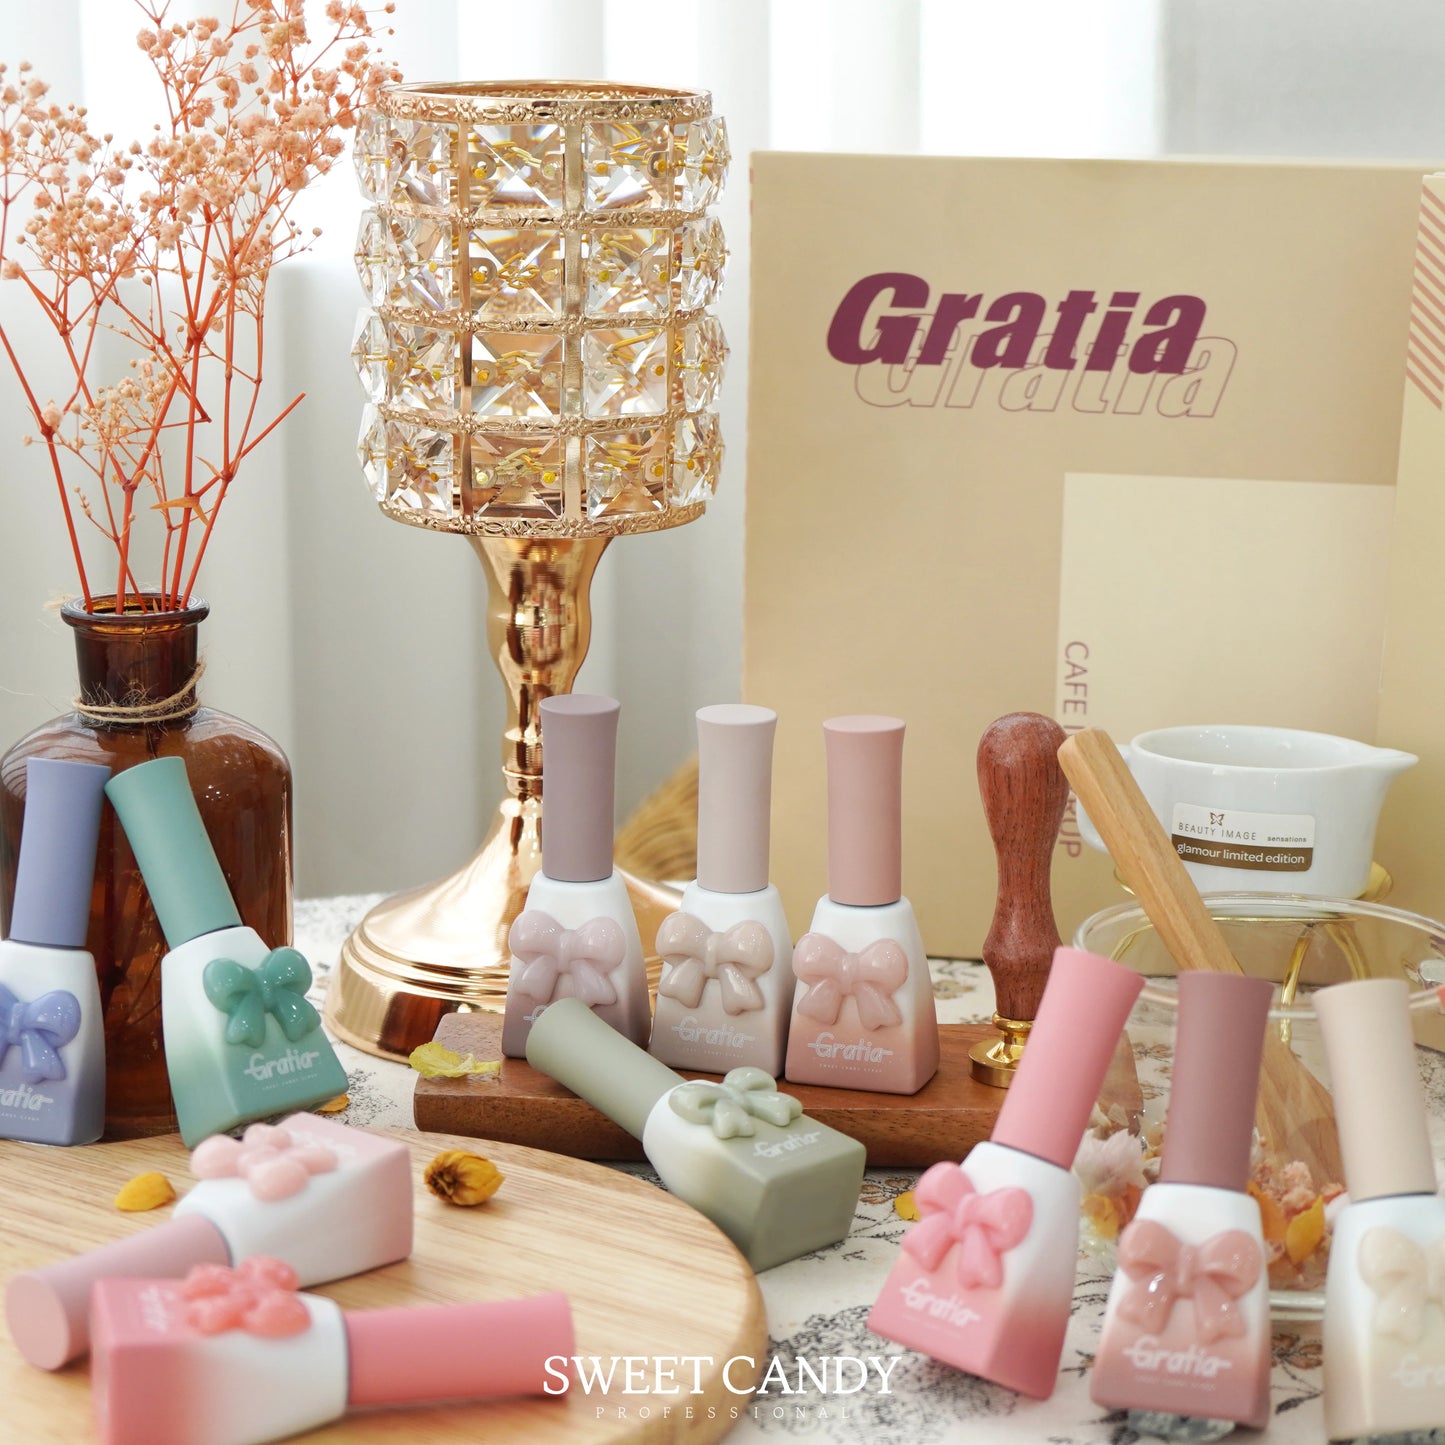 Sweet Candy- Gratia